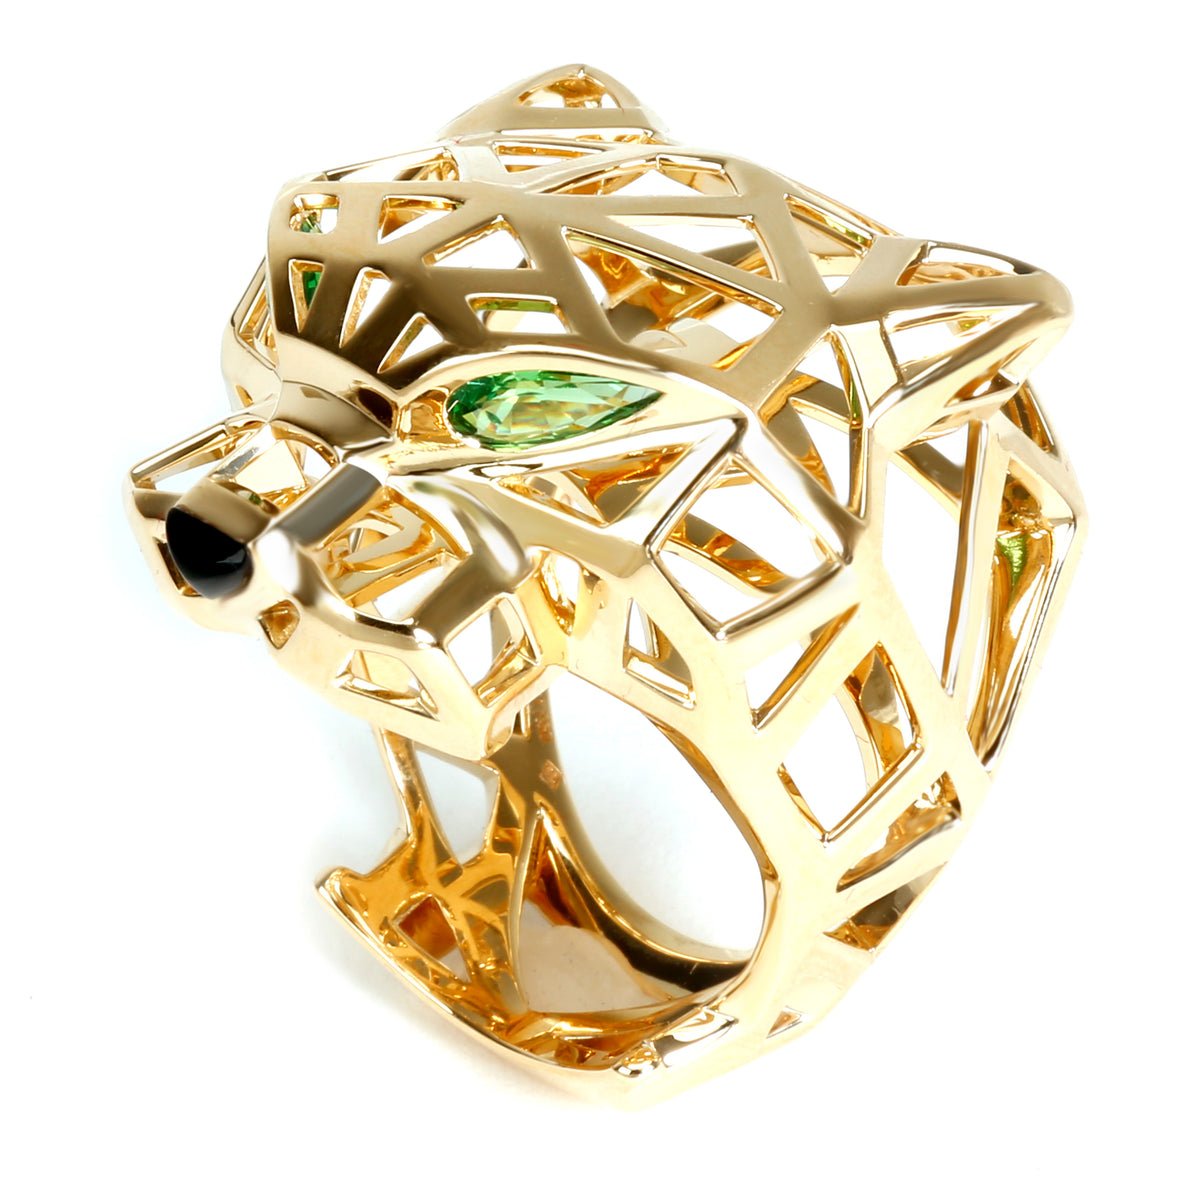 Cartier Panthère de Cartier Ring with Onyx & Tourmaline in 18K Gold